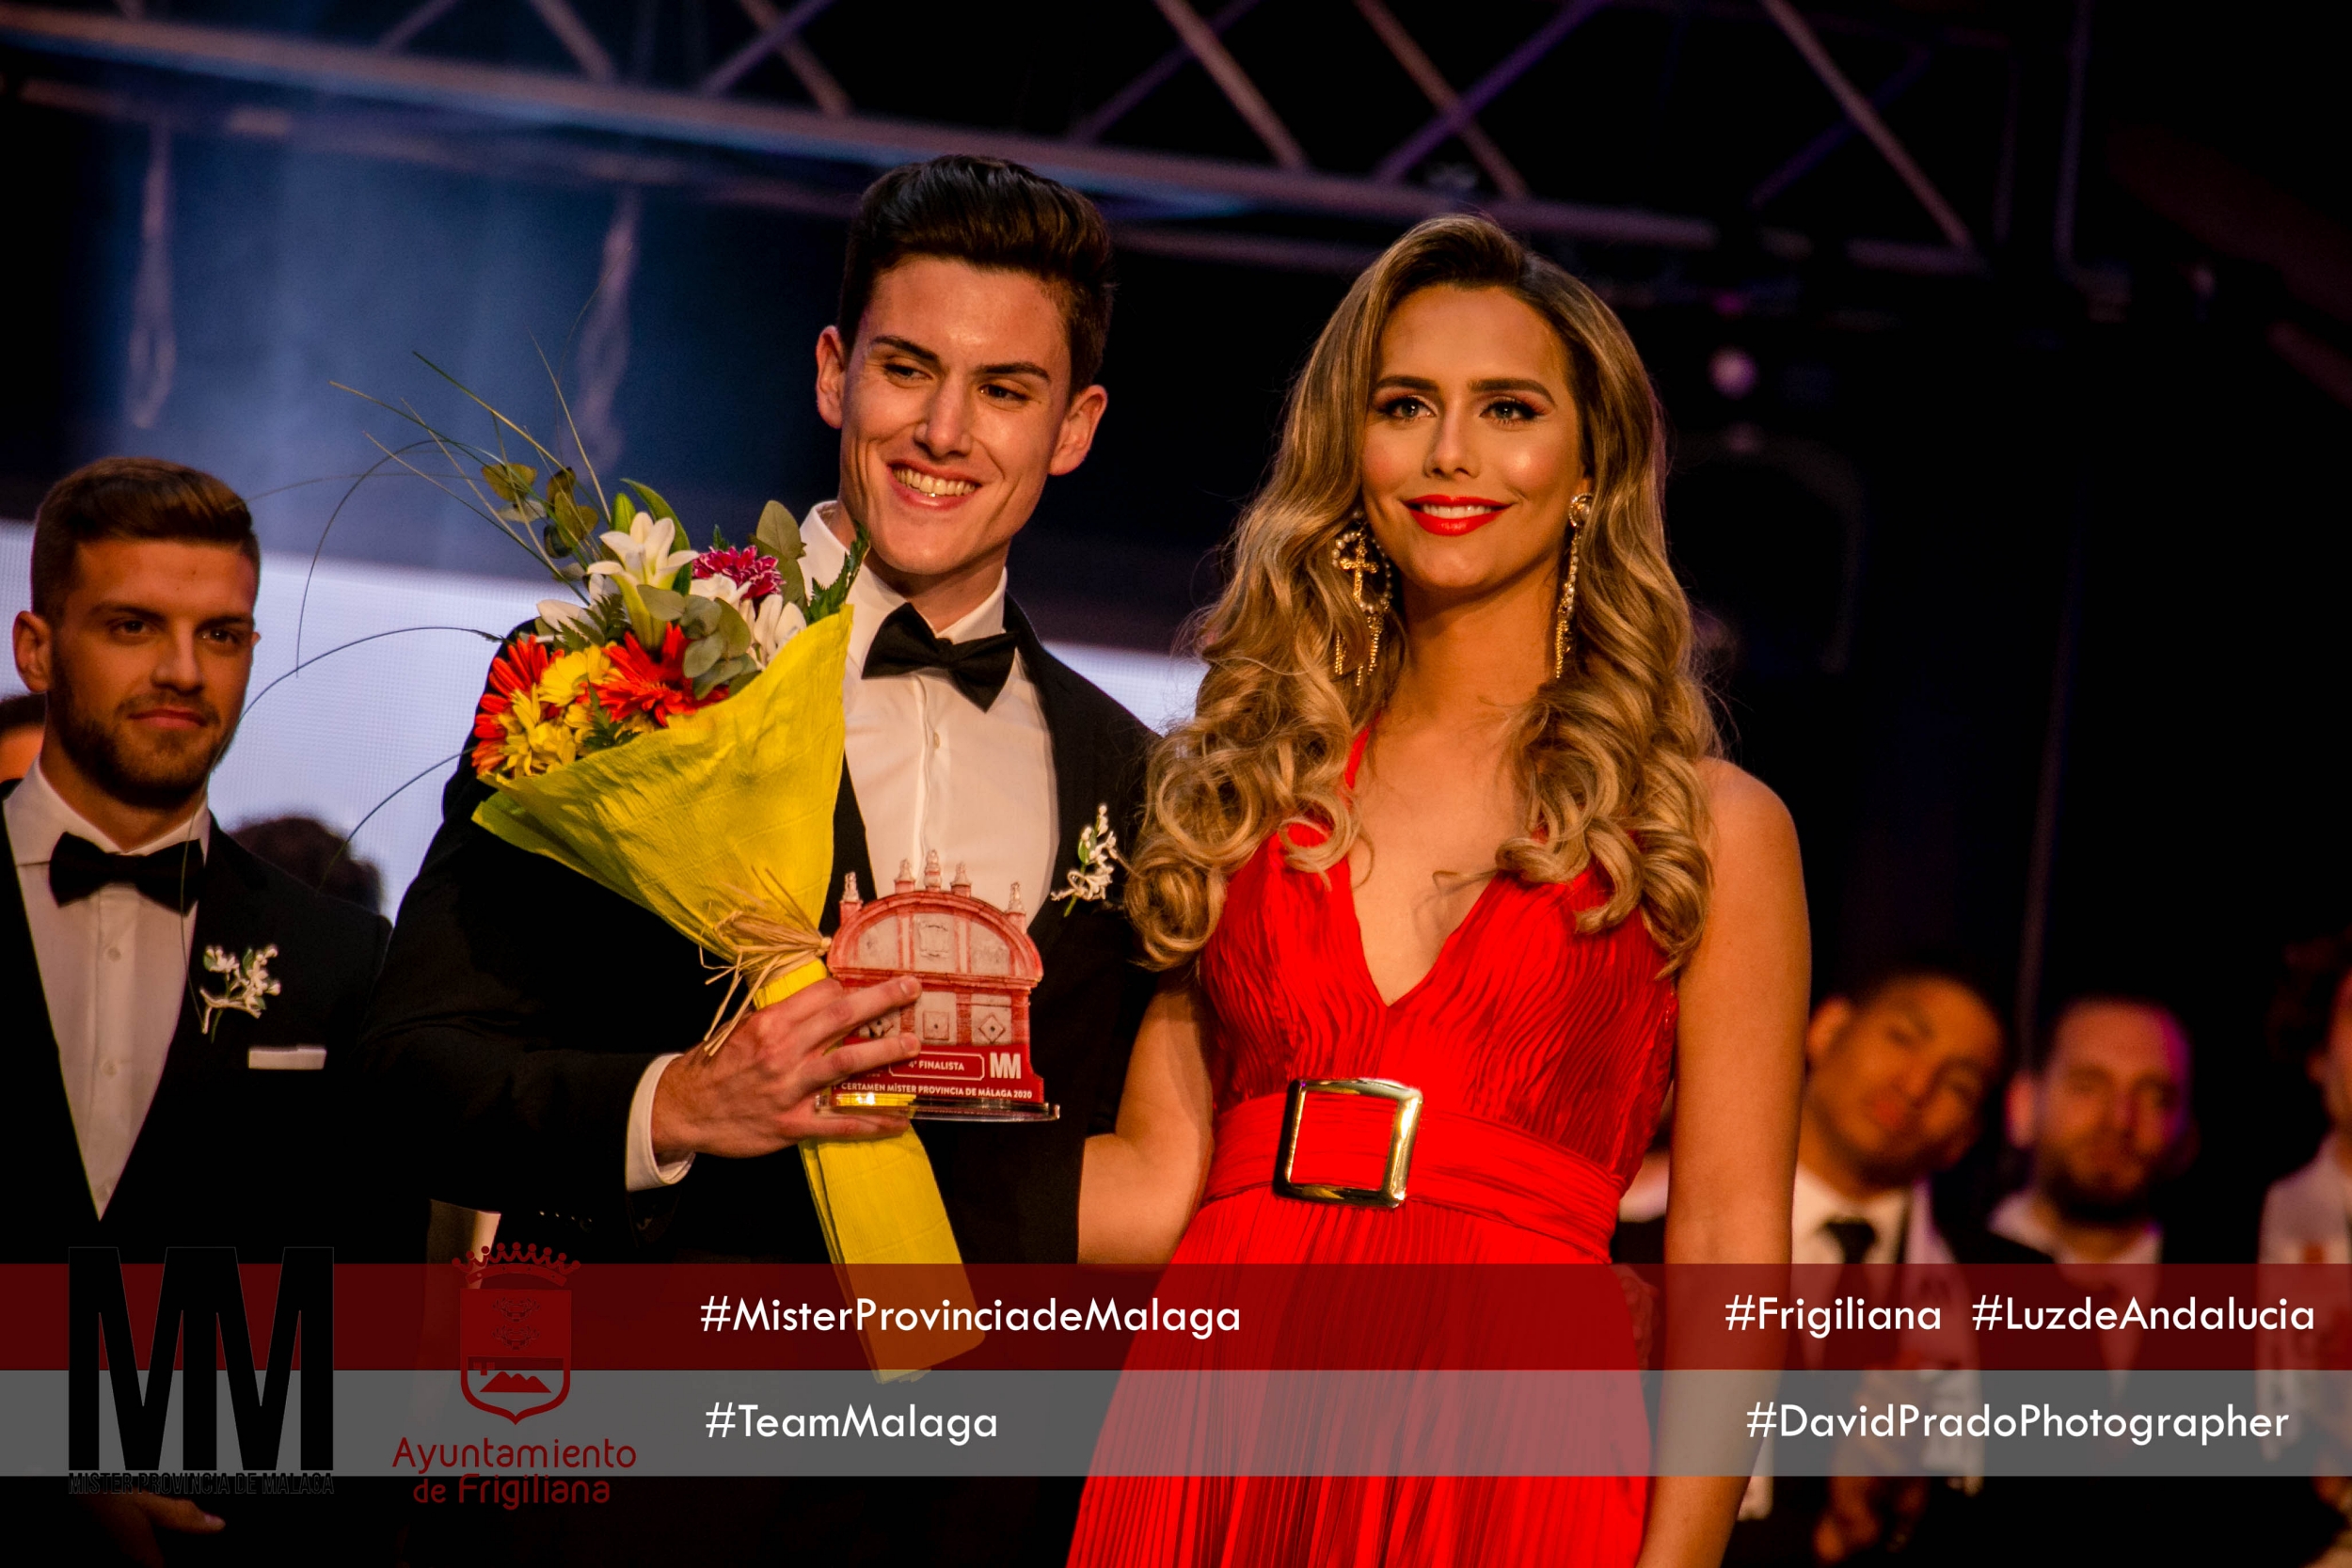 Gala Final Mister Provincia de Malaga 2020 en Frigiliana 14